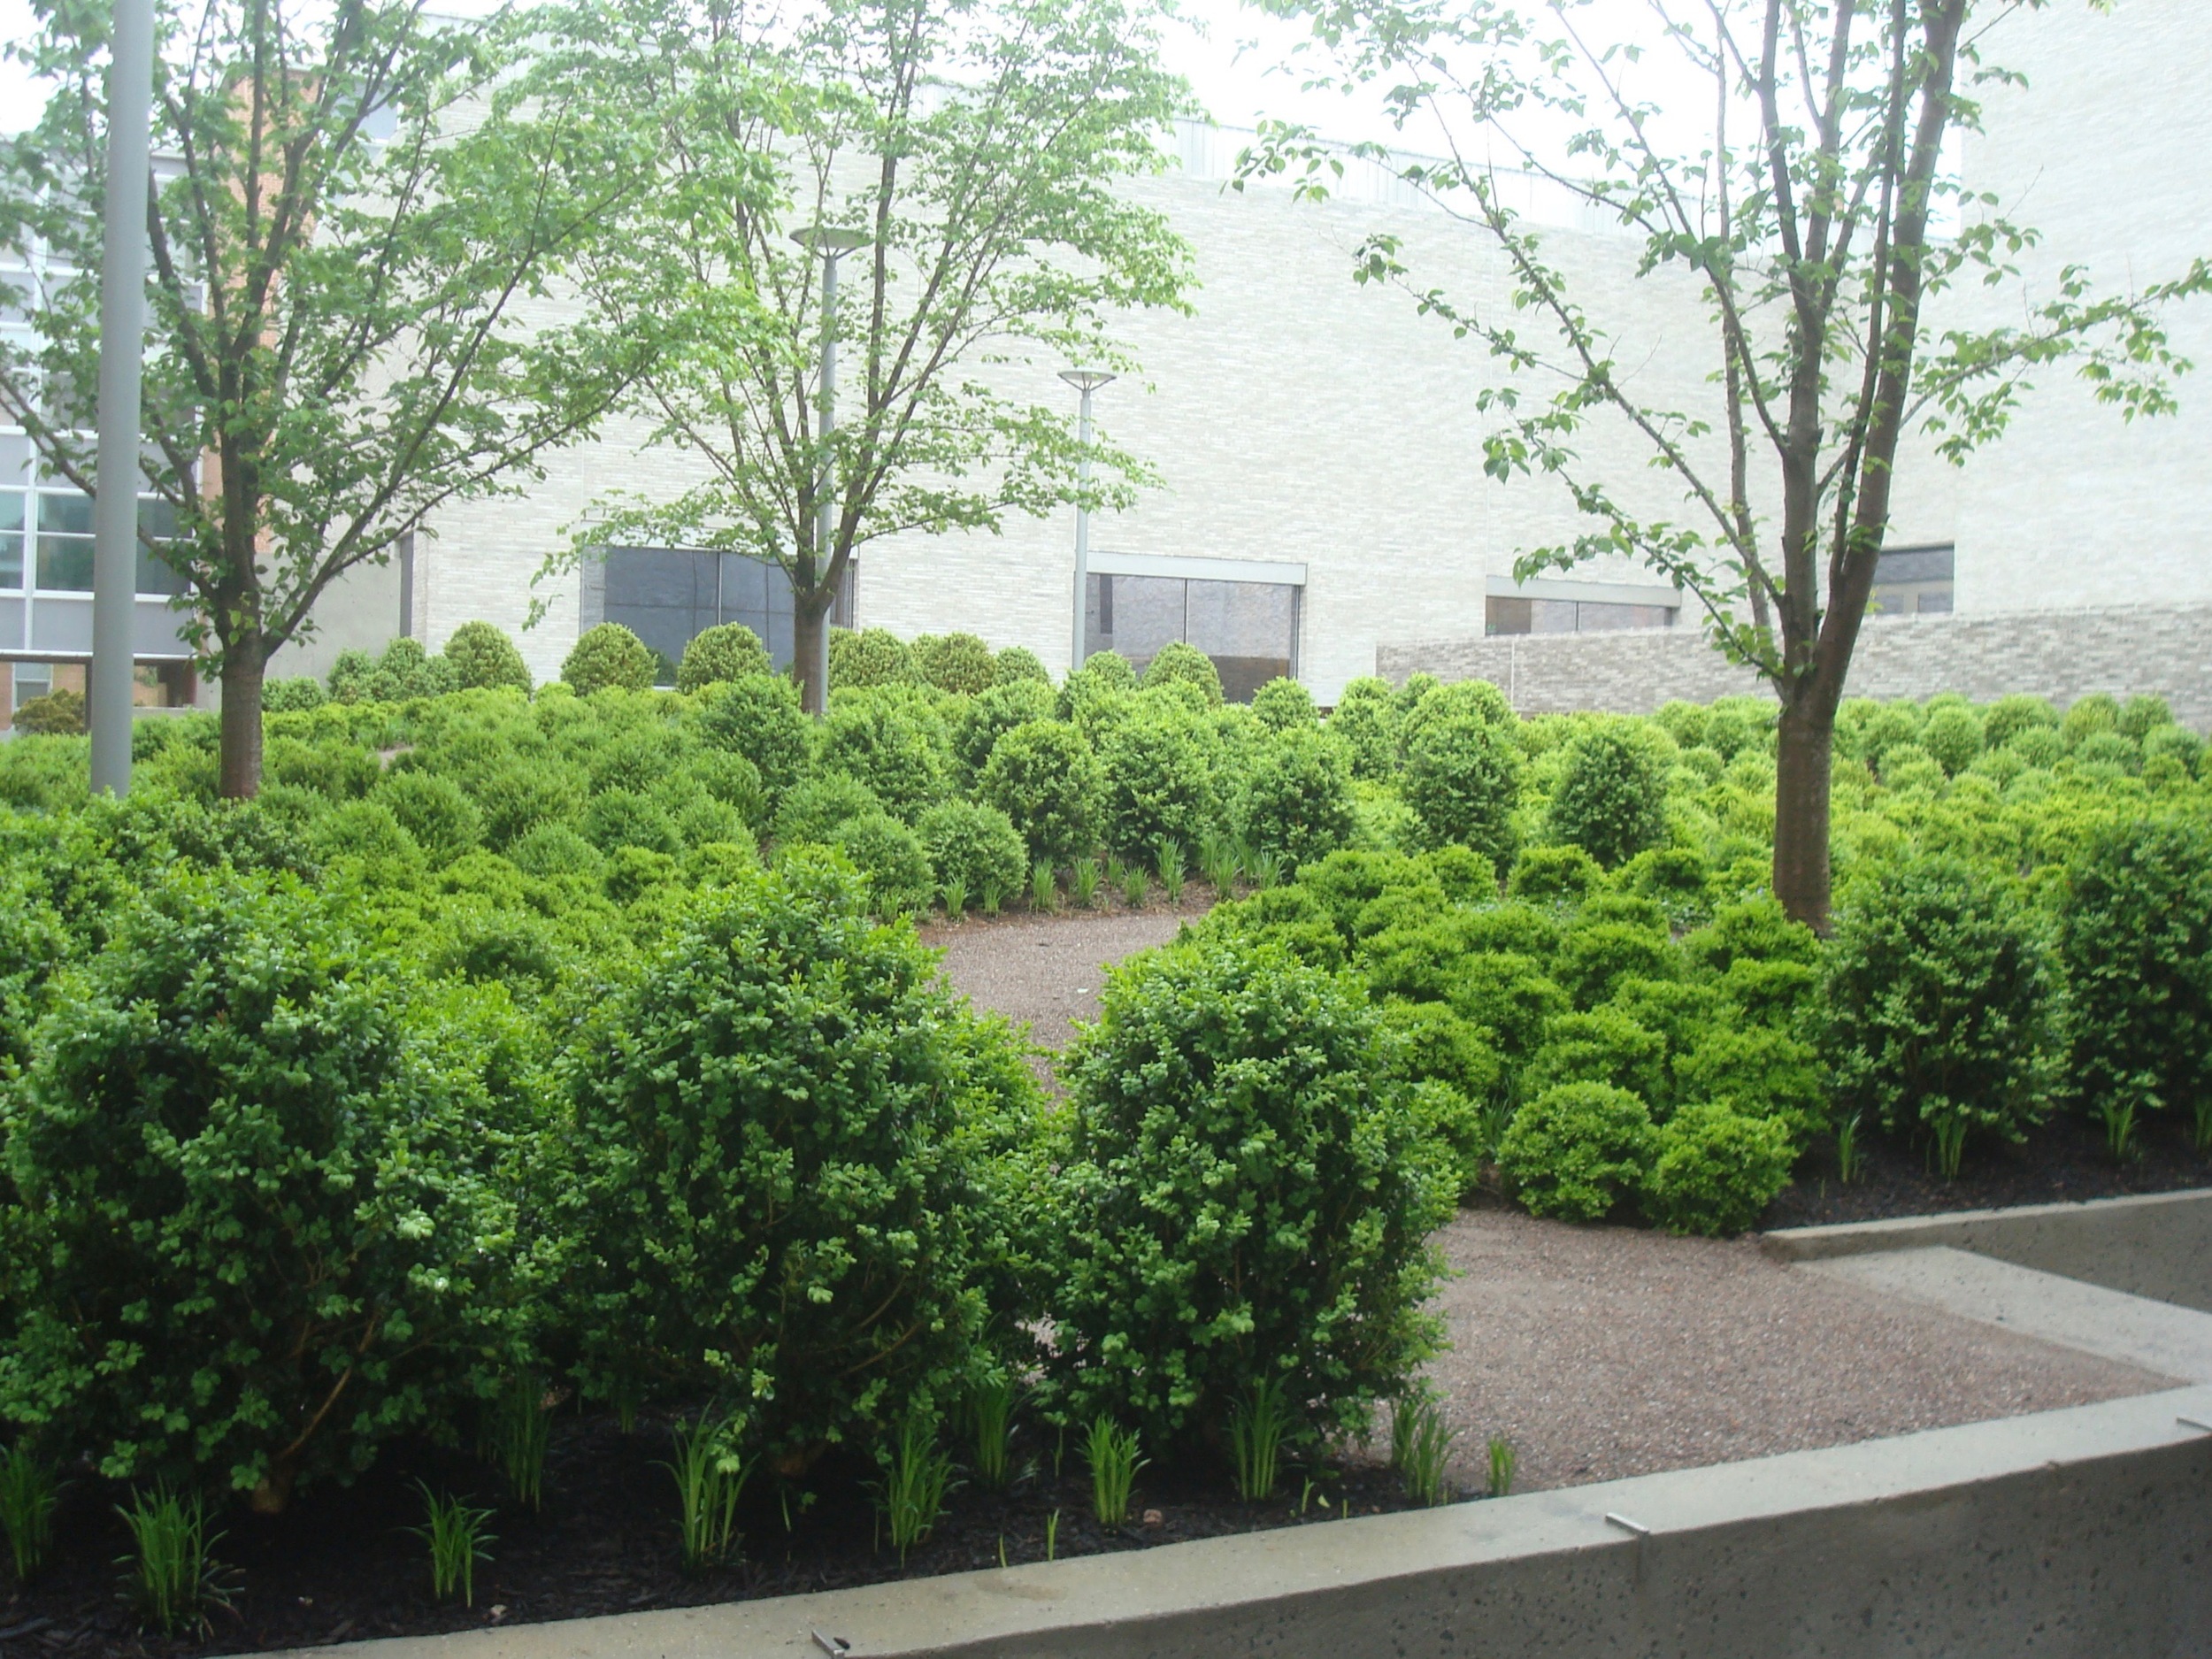 "Green Roof" at Andlinger Center